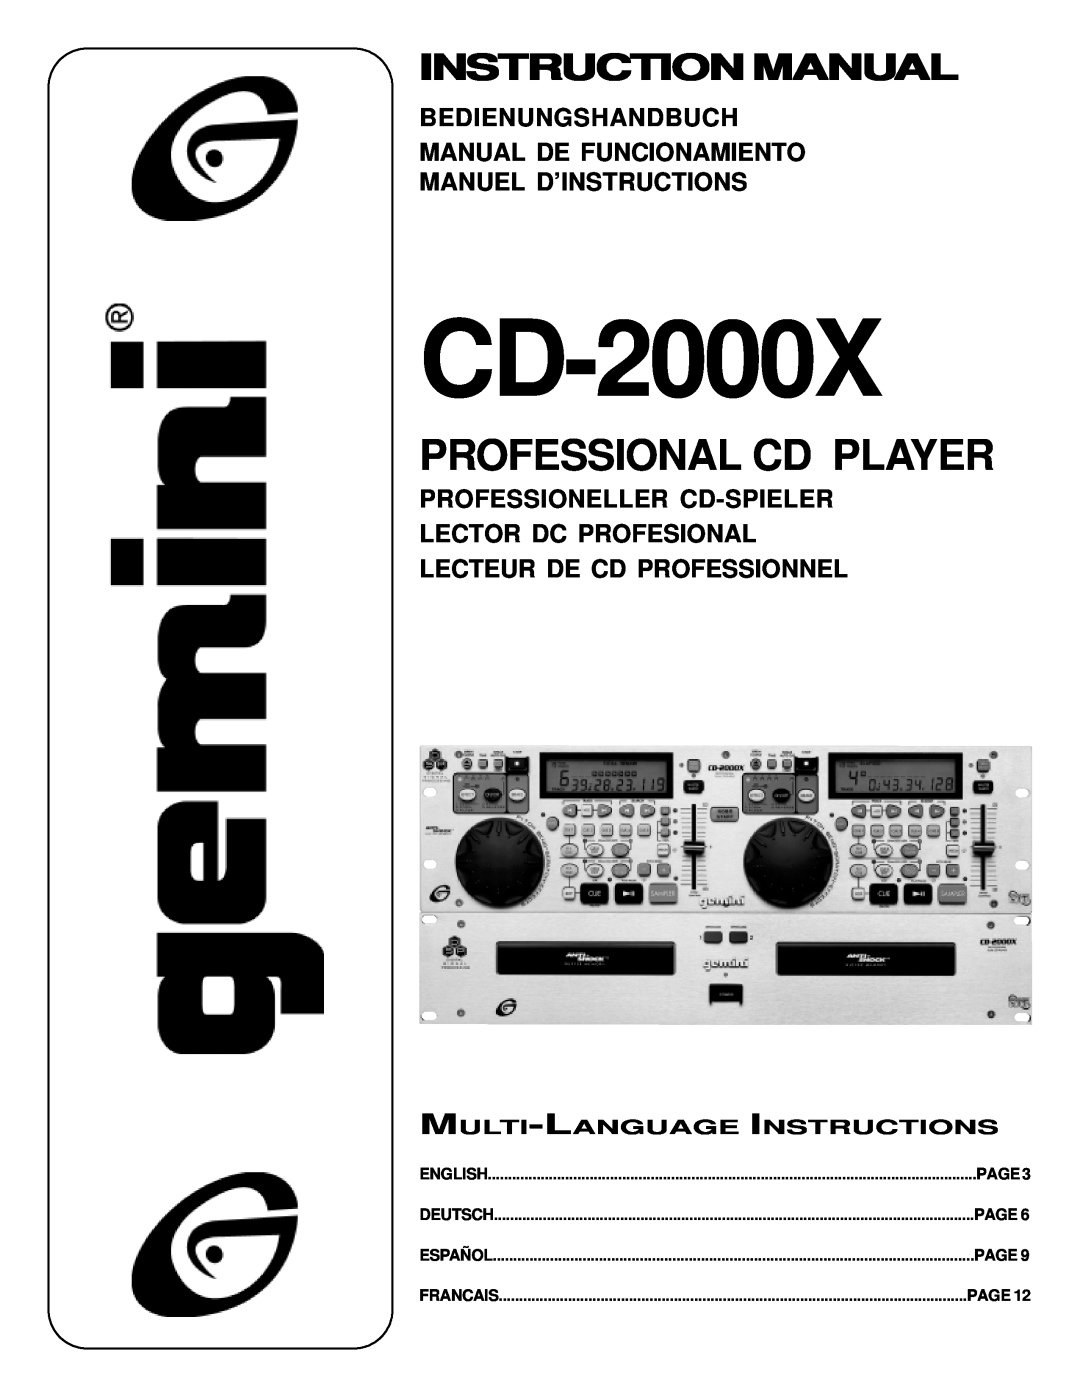 Gemini CD-2000X manual Bedienungshandbuch, Manual De Funcionamiento Manuel D’Instructions, Professioneller Cd-Spieler 